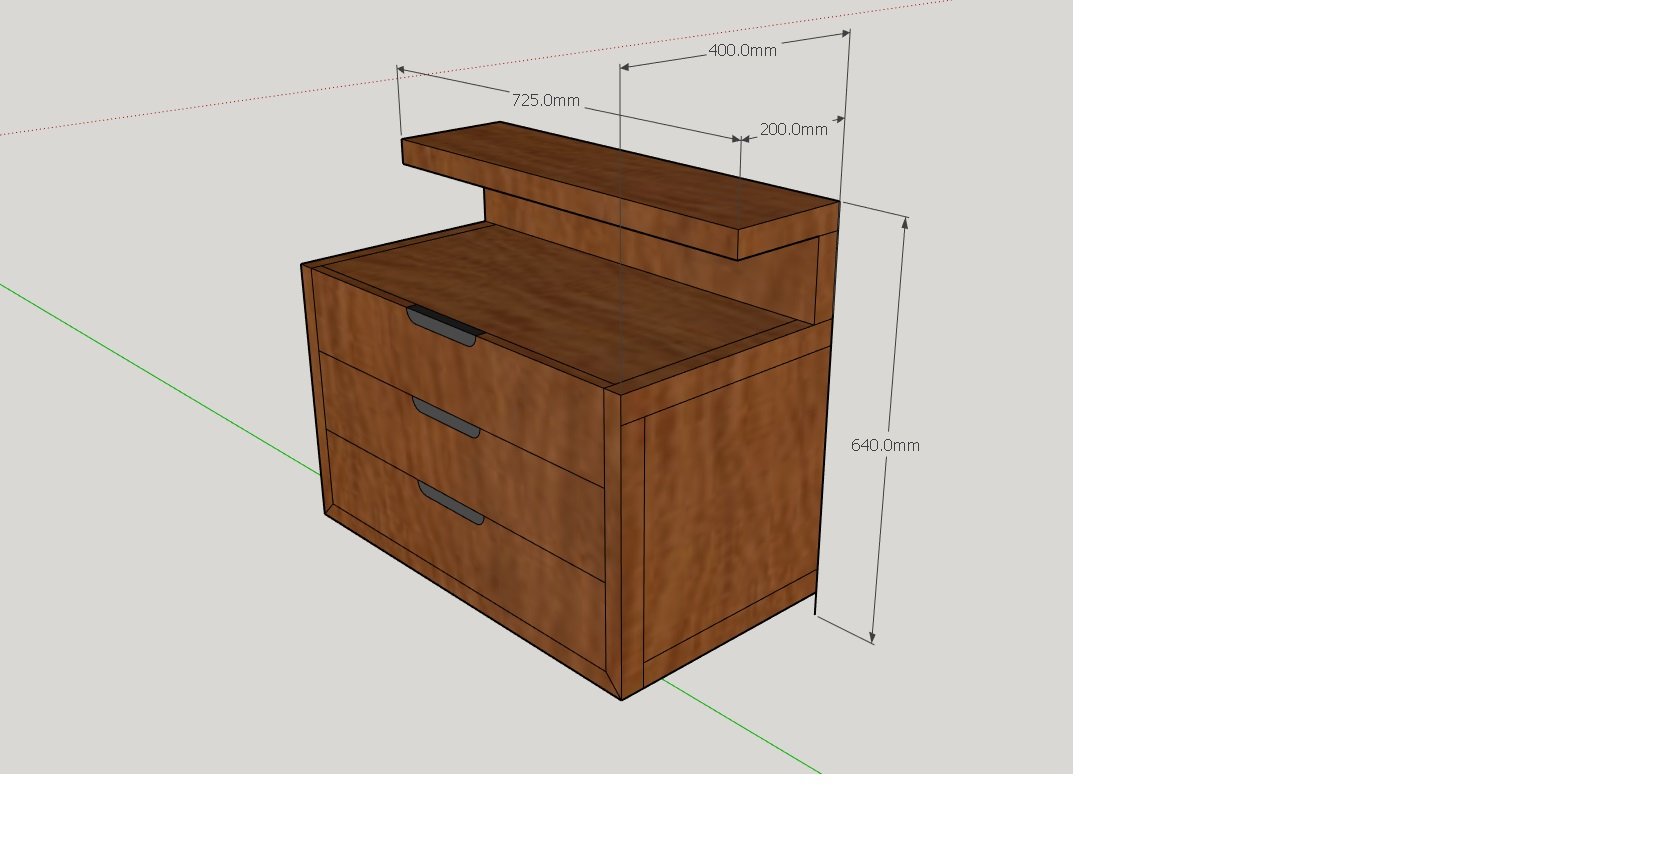 stephen claudi bedside table design.jpg